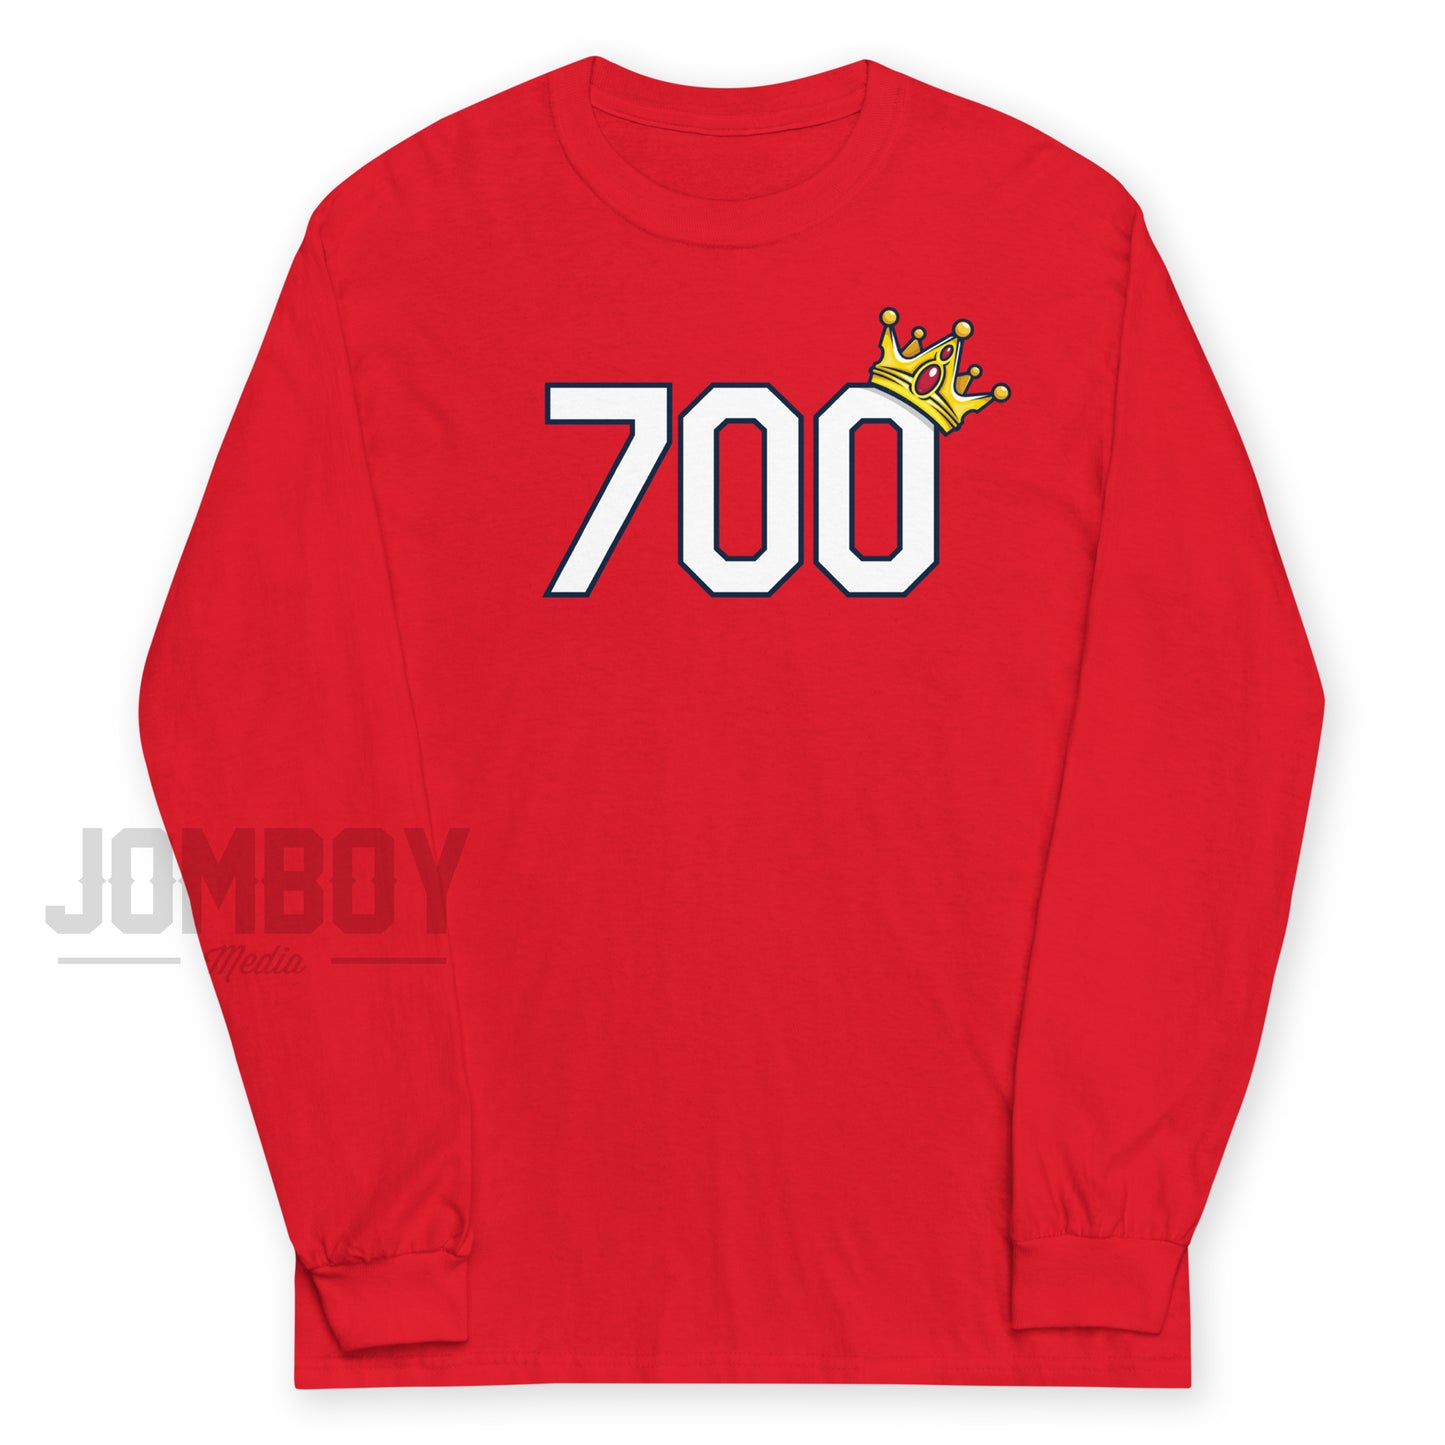 700 crown | Long Sleeve Shirt